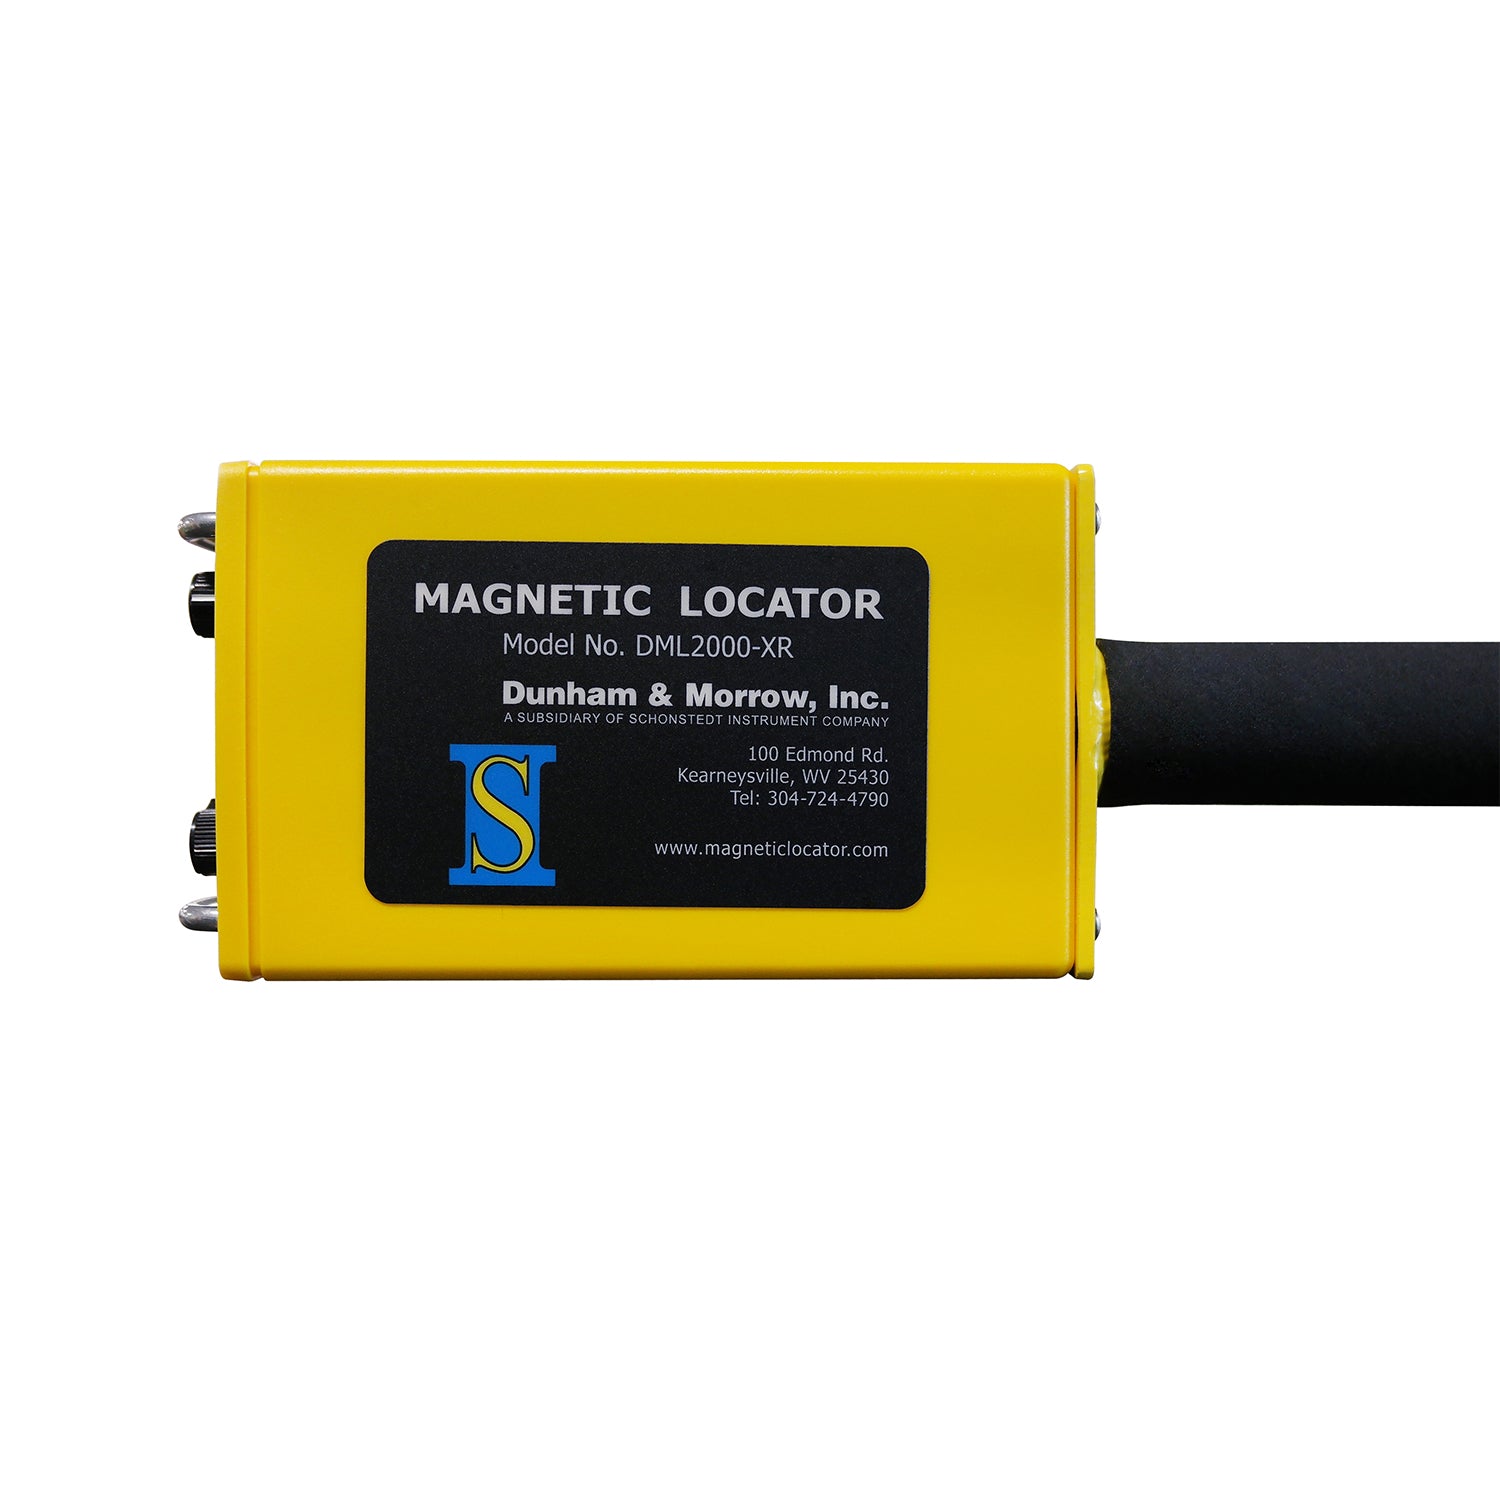 Dunham & Morrow DML2000-XR Magnetic Locator -Magnetic Locators- eGPS Solutions Inc.